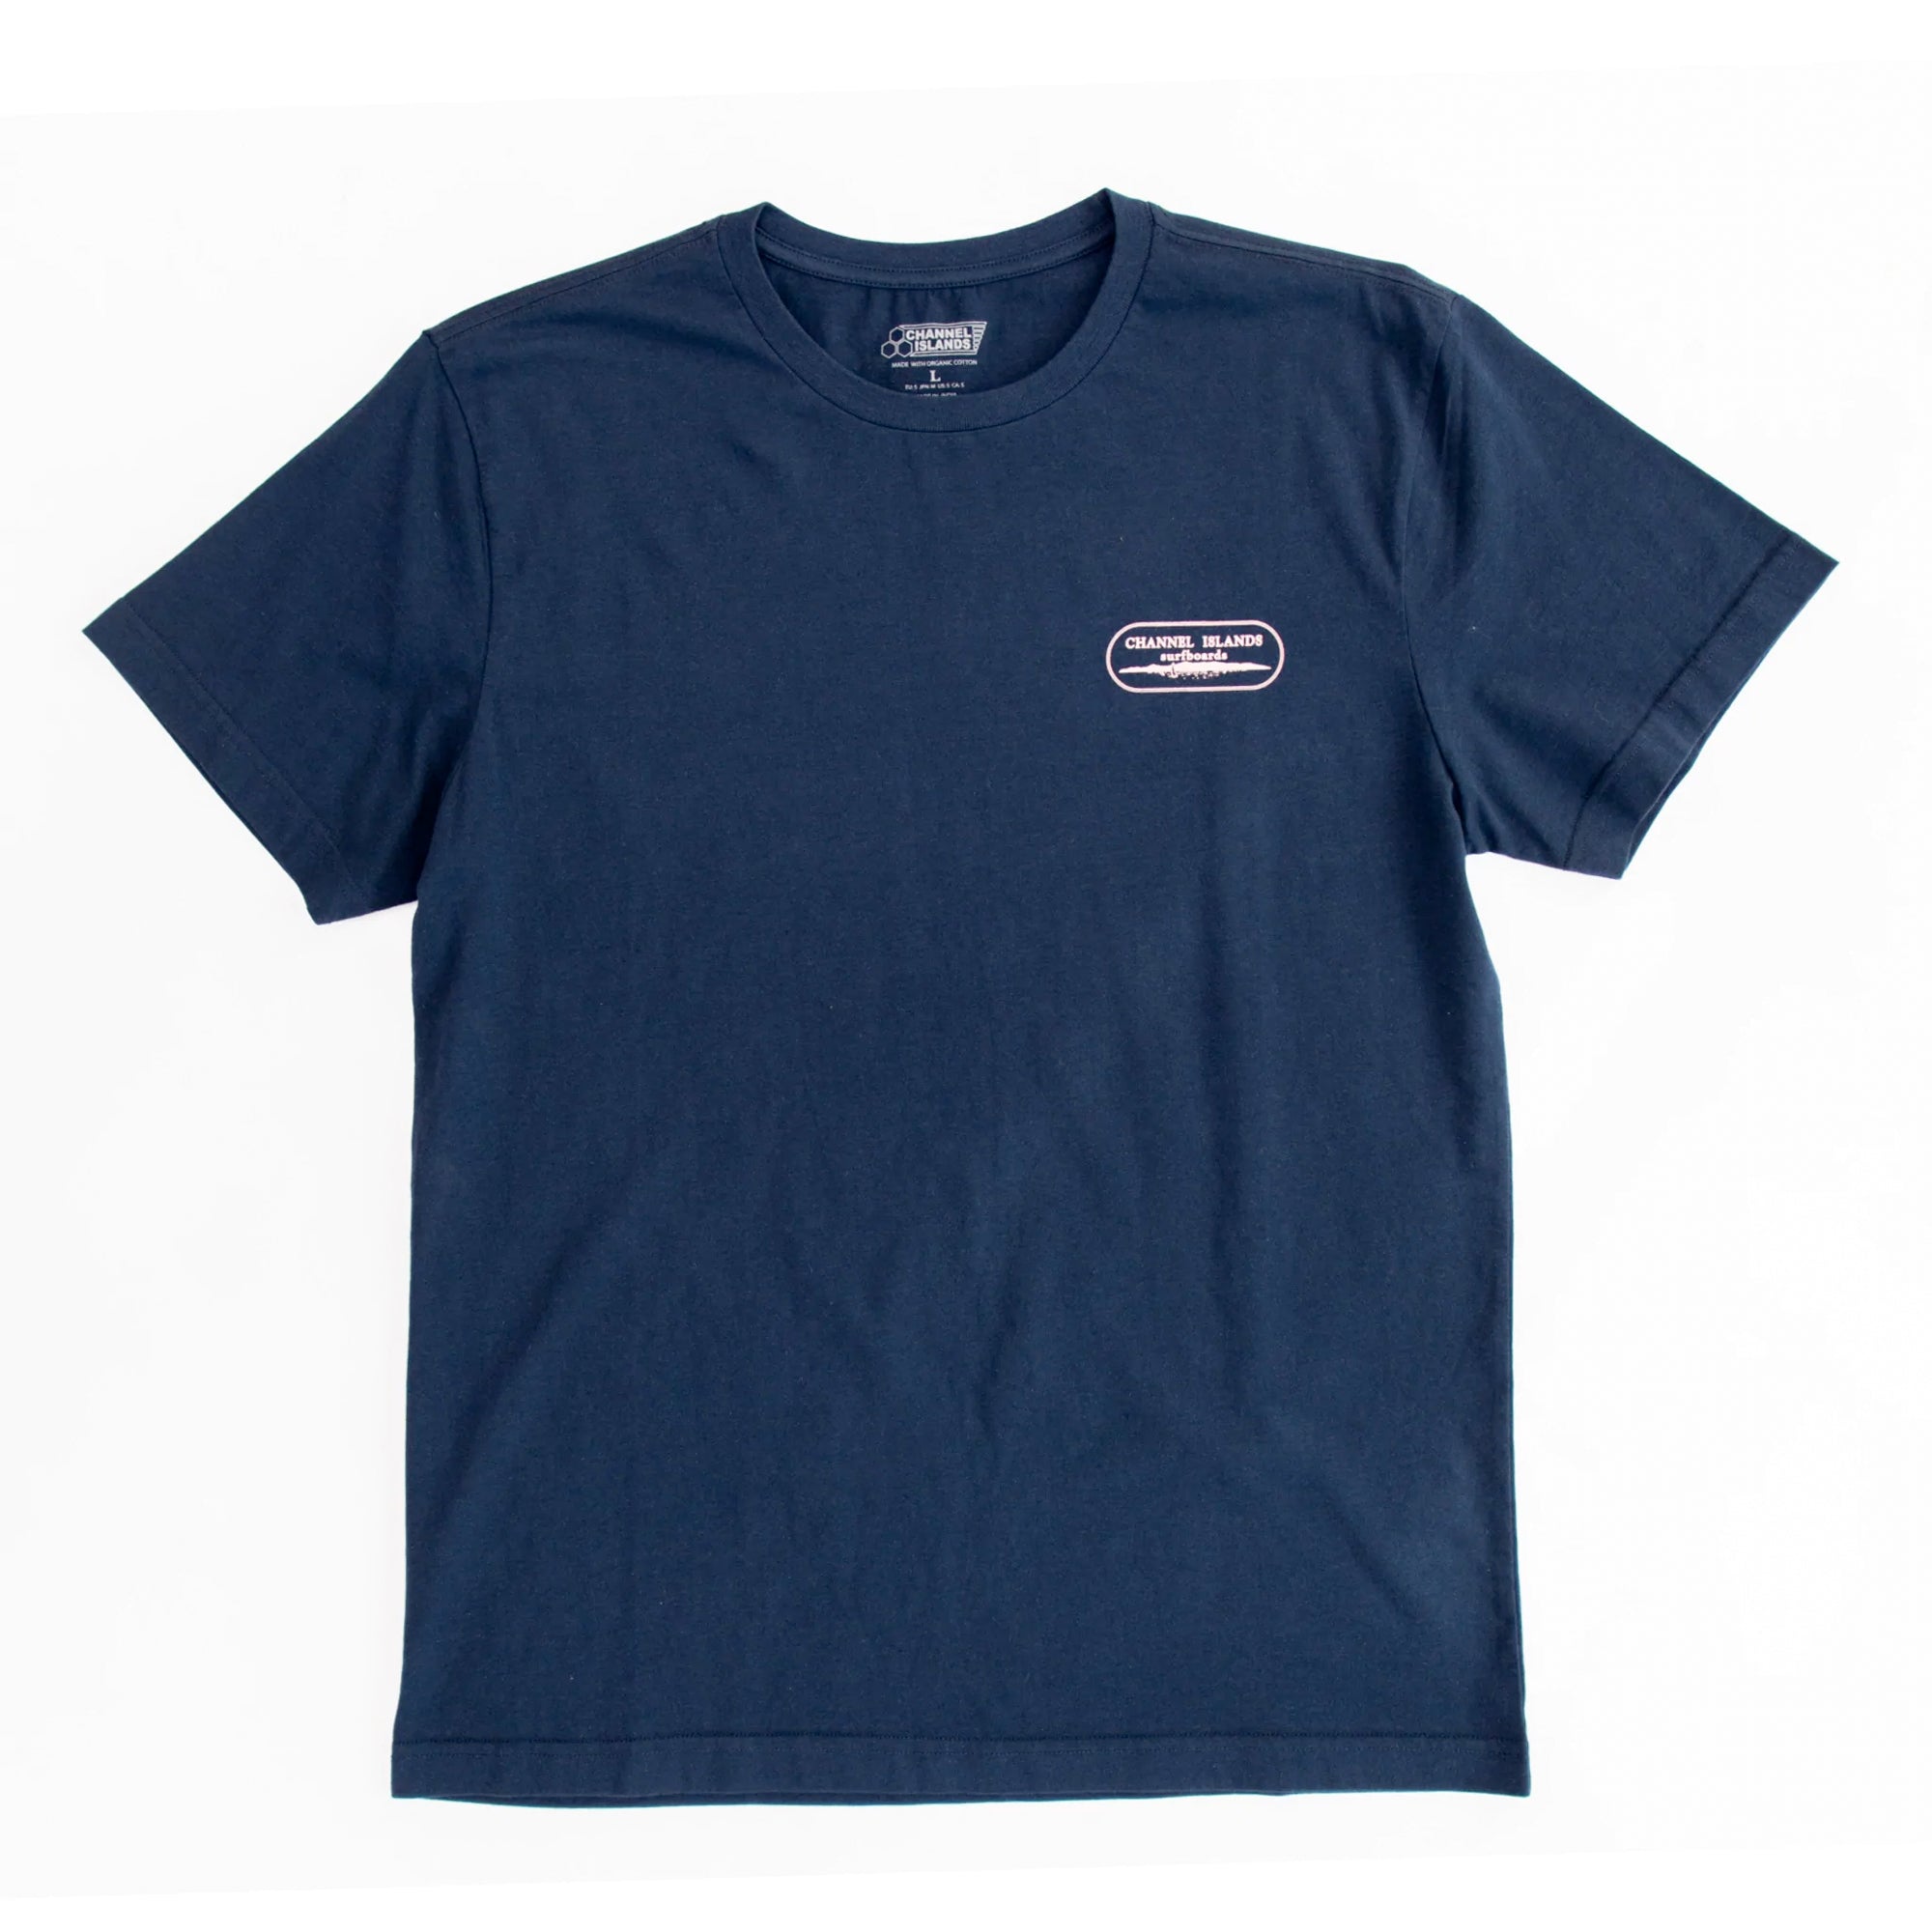 Channel Islands Oval Islands Men's S/S T-Shirt